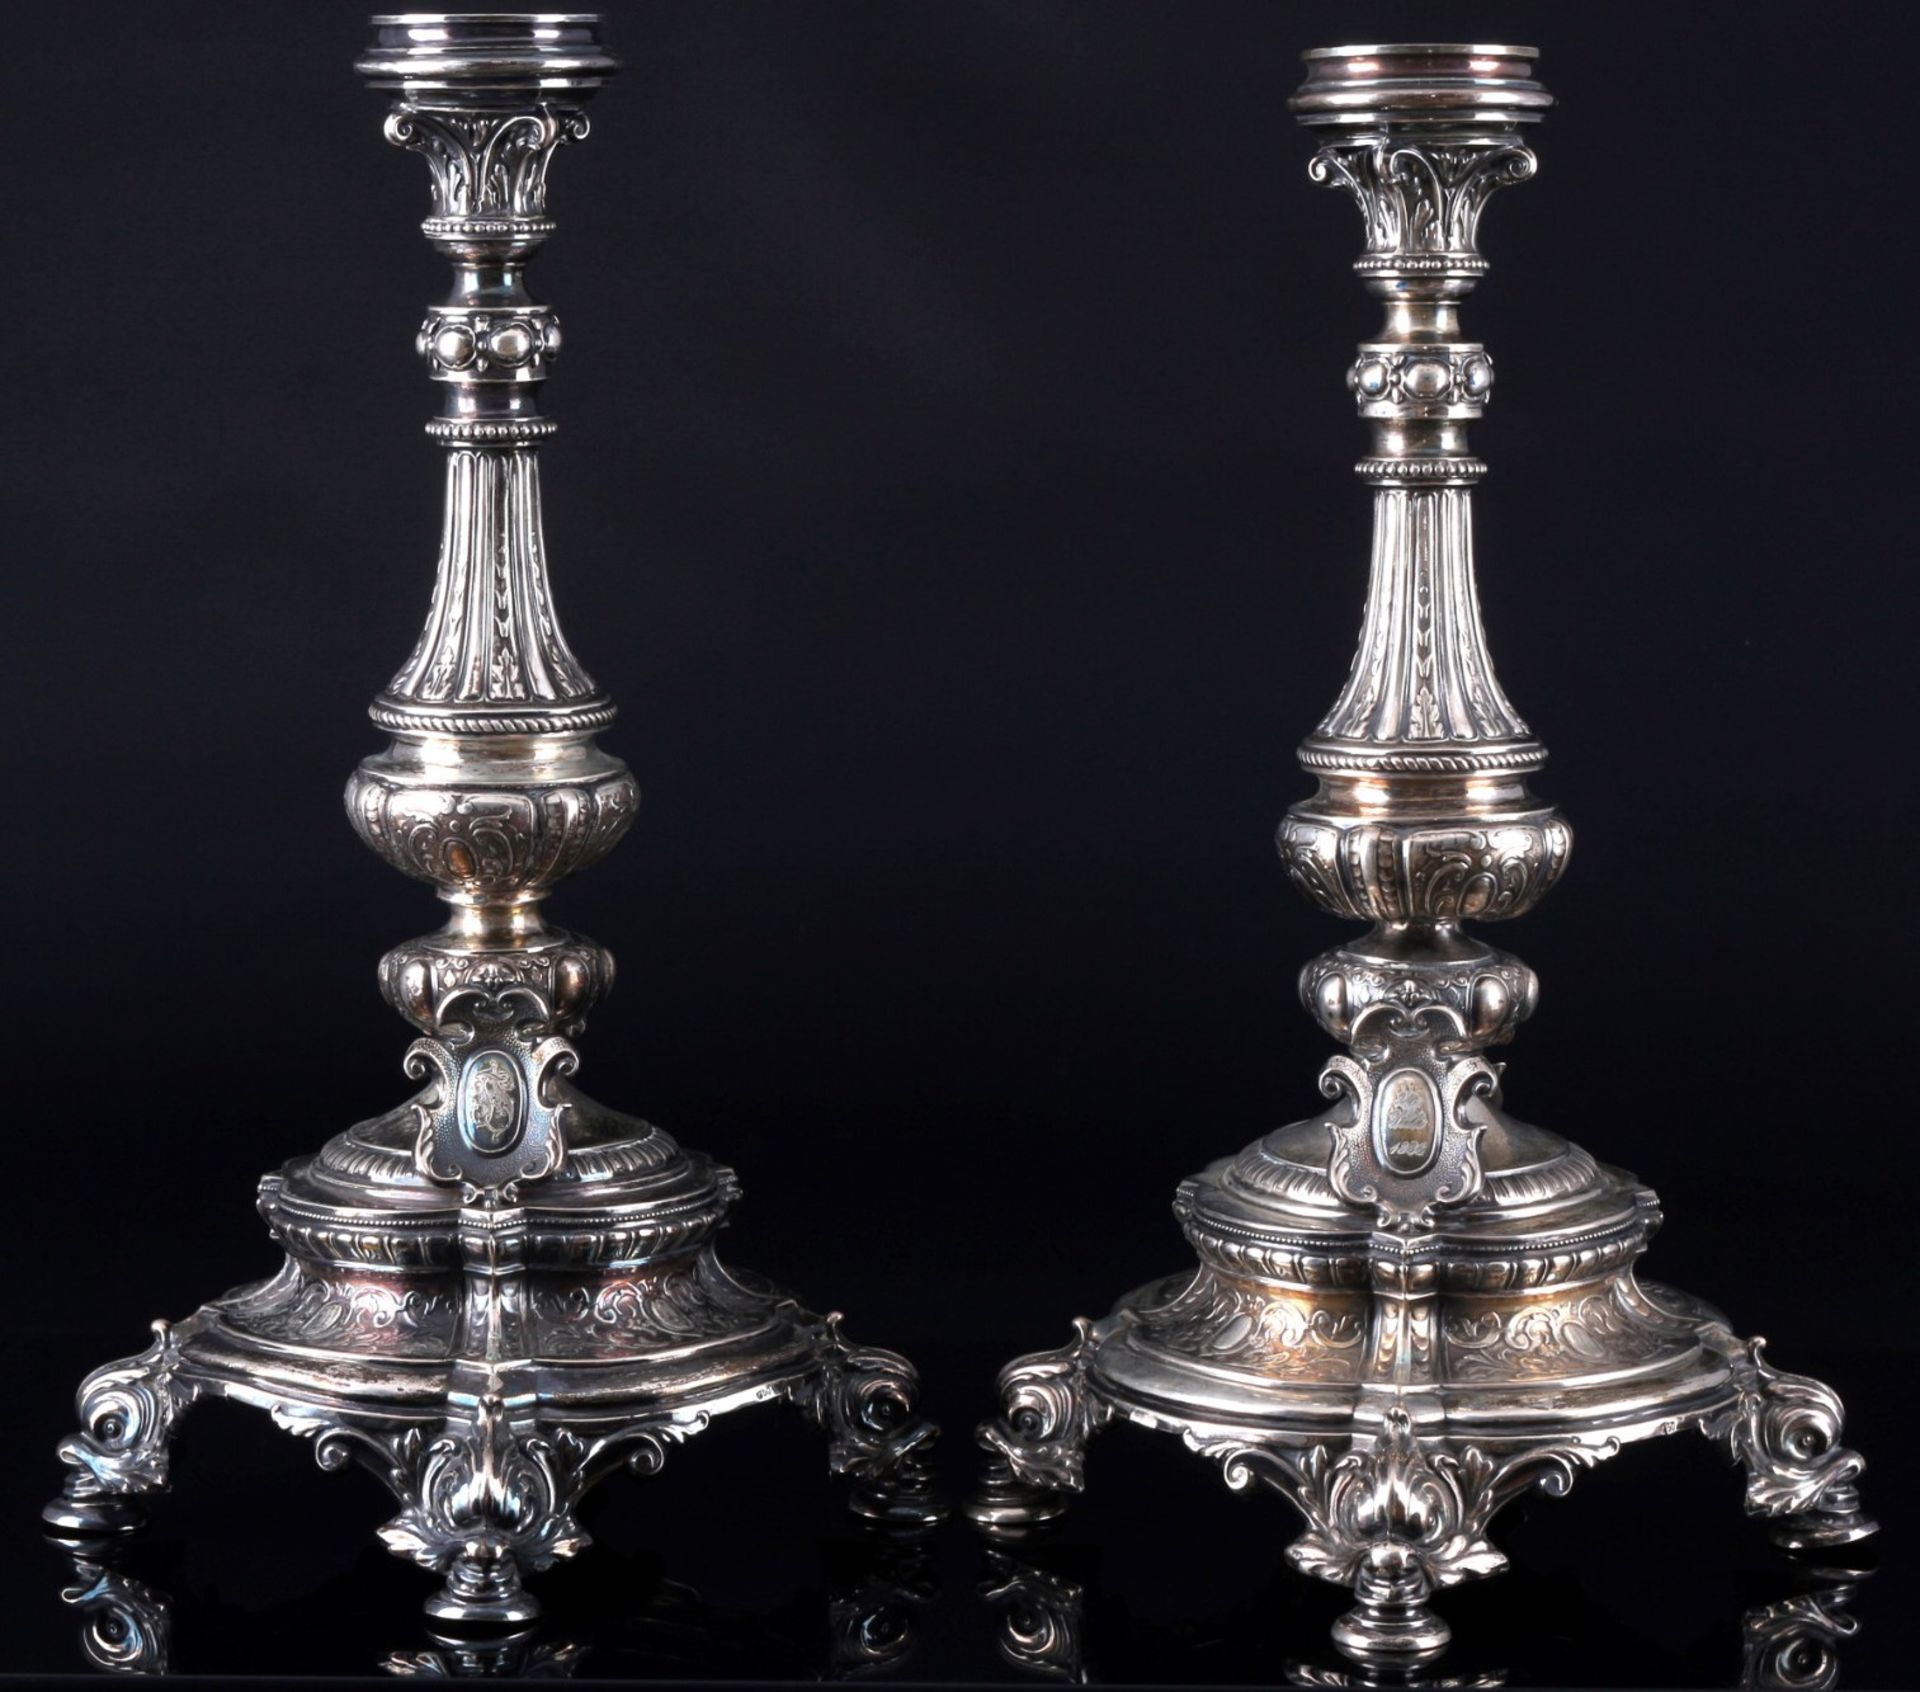 750 silver pair of large candlesticks 19th century, großes Paar Silber Kerzenständer 19. Jahrhundert